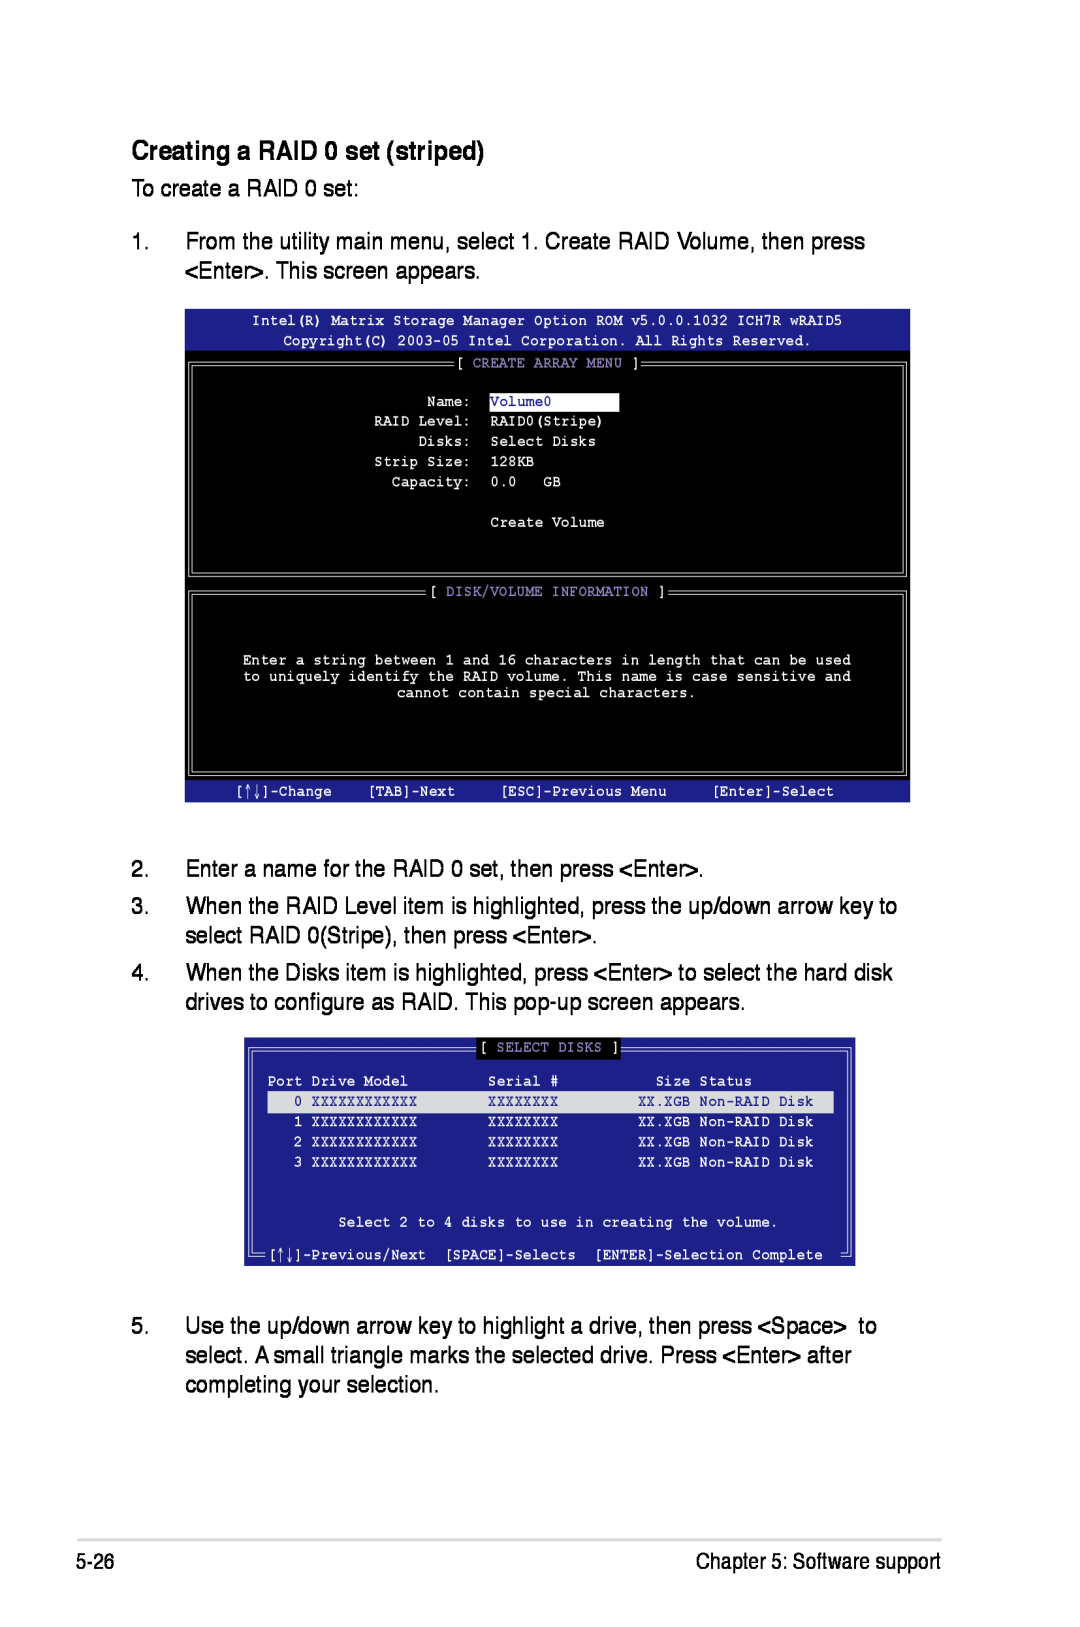 Asus Z7S WS manual Creating a RAID 0 set striped 